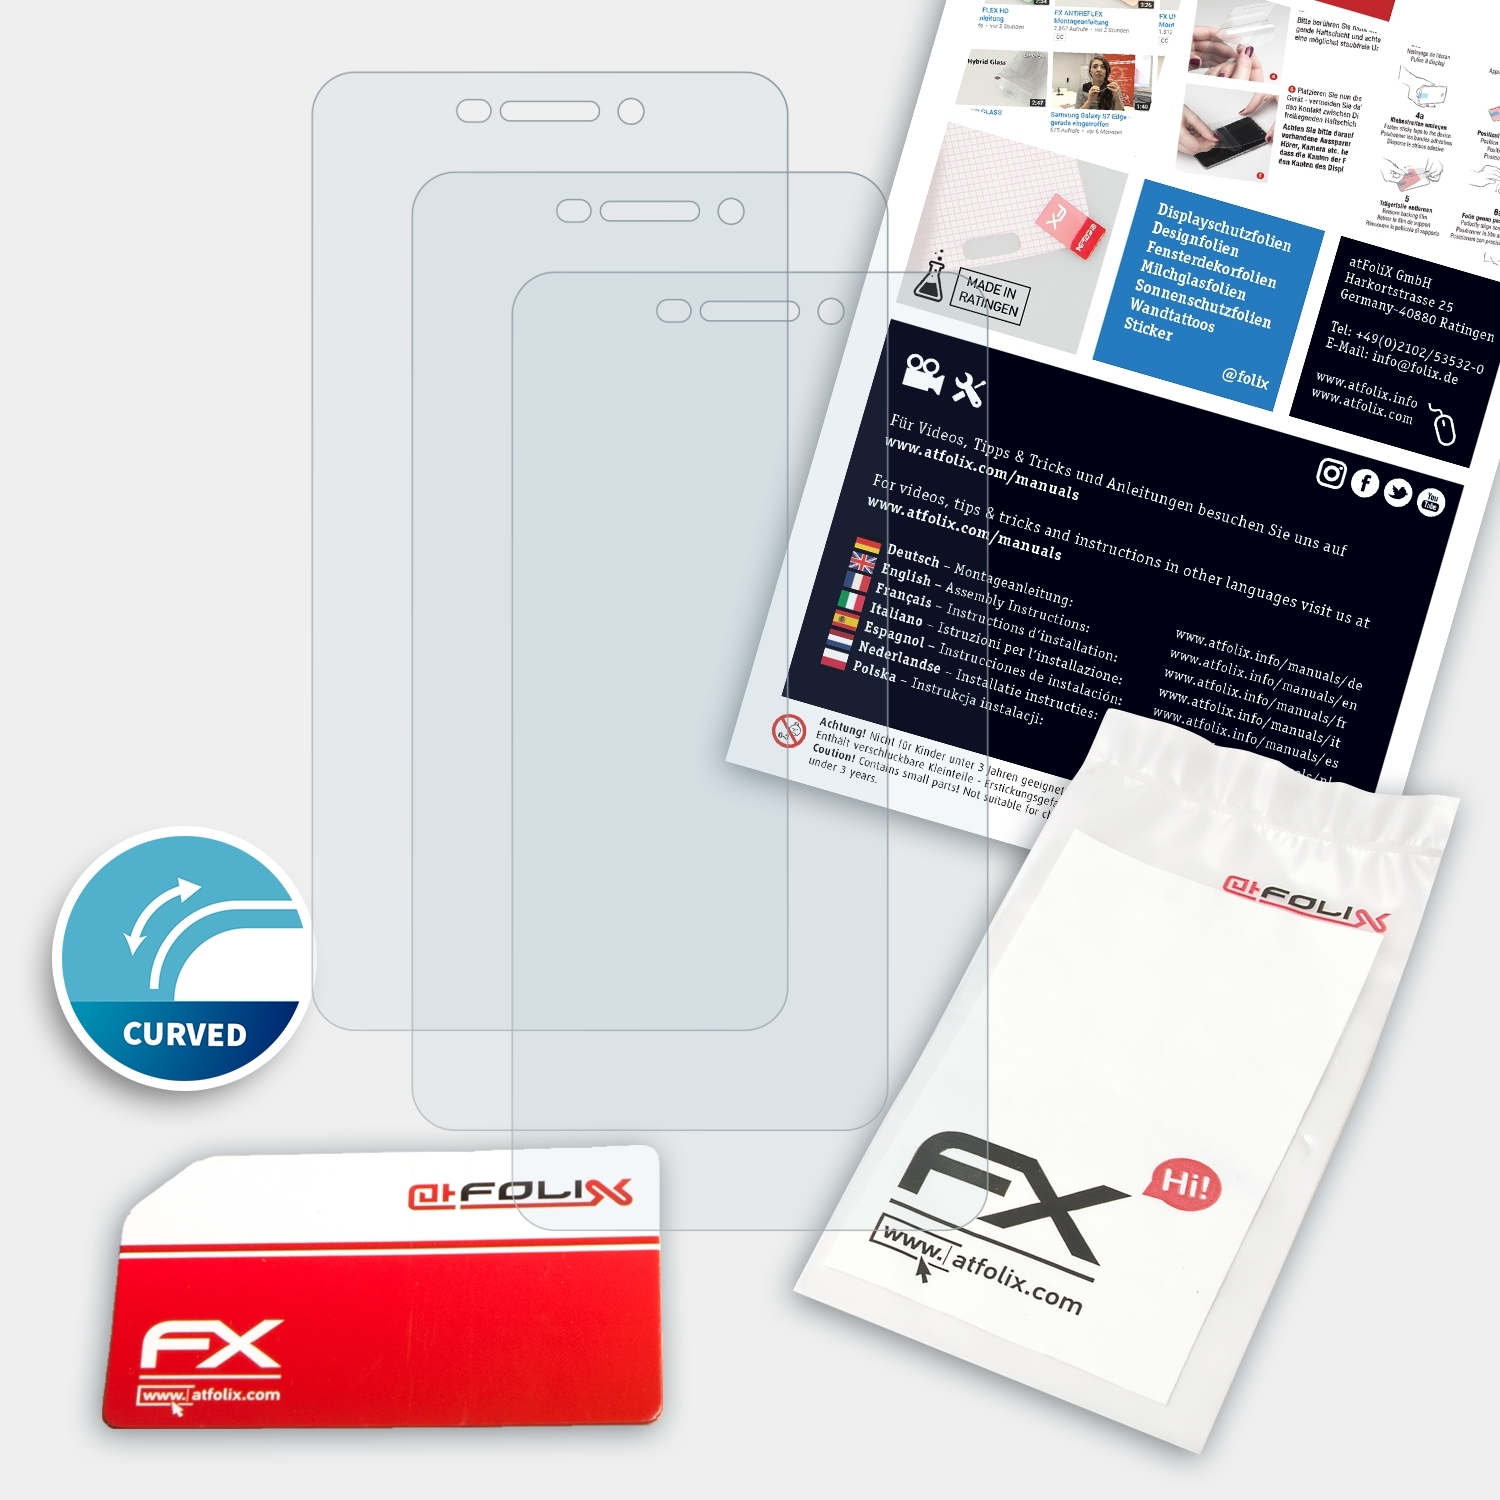 ATFOLIX Nokia Displayschutz(für 6 FX-ActiFleX 3x (2018))